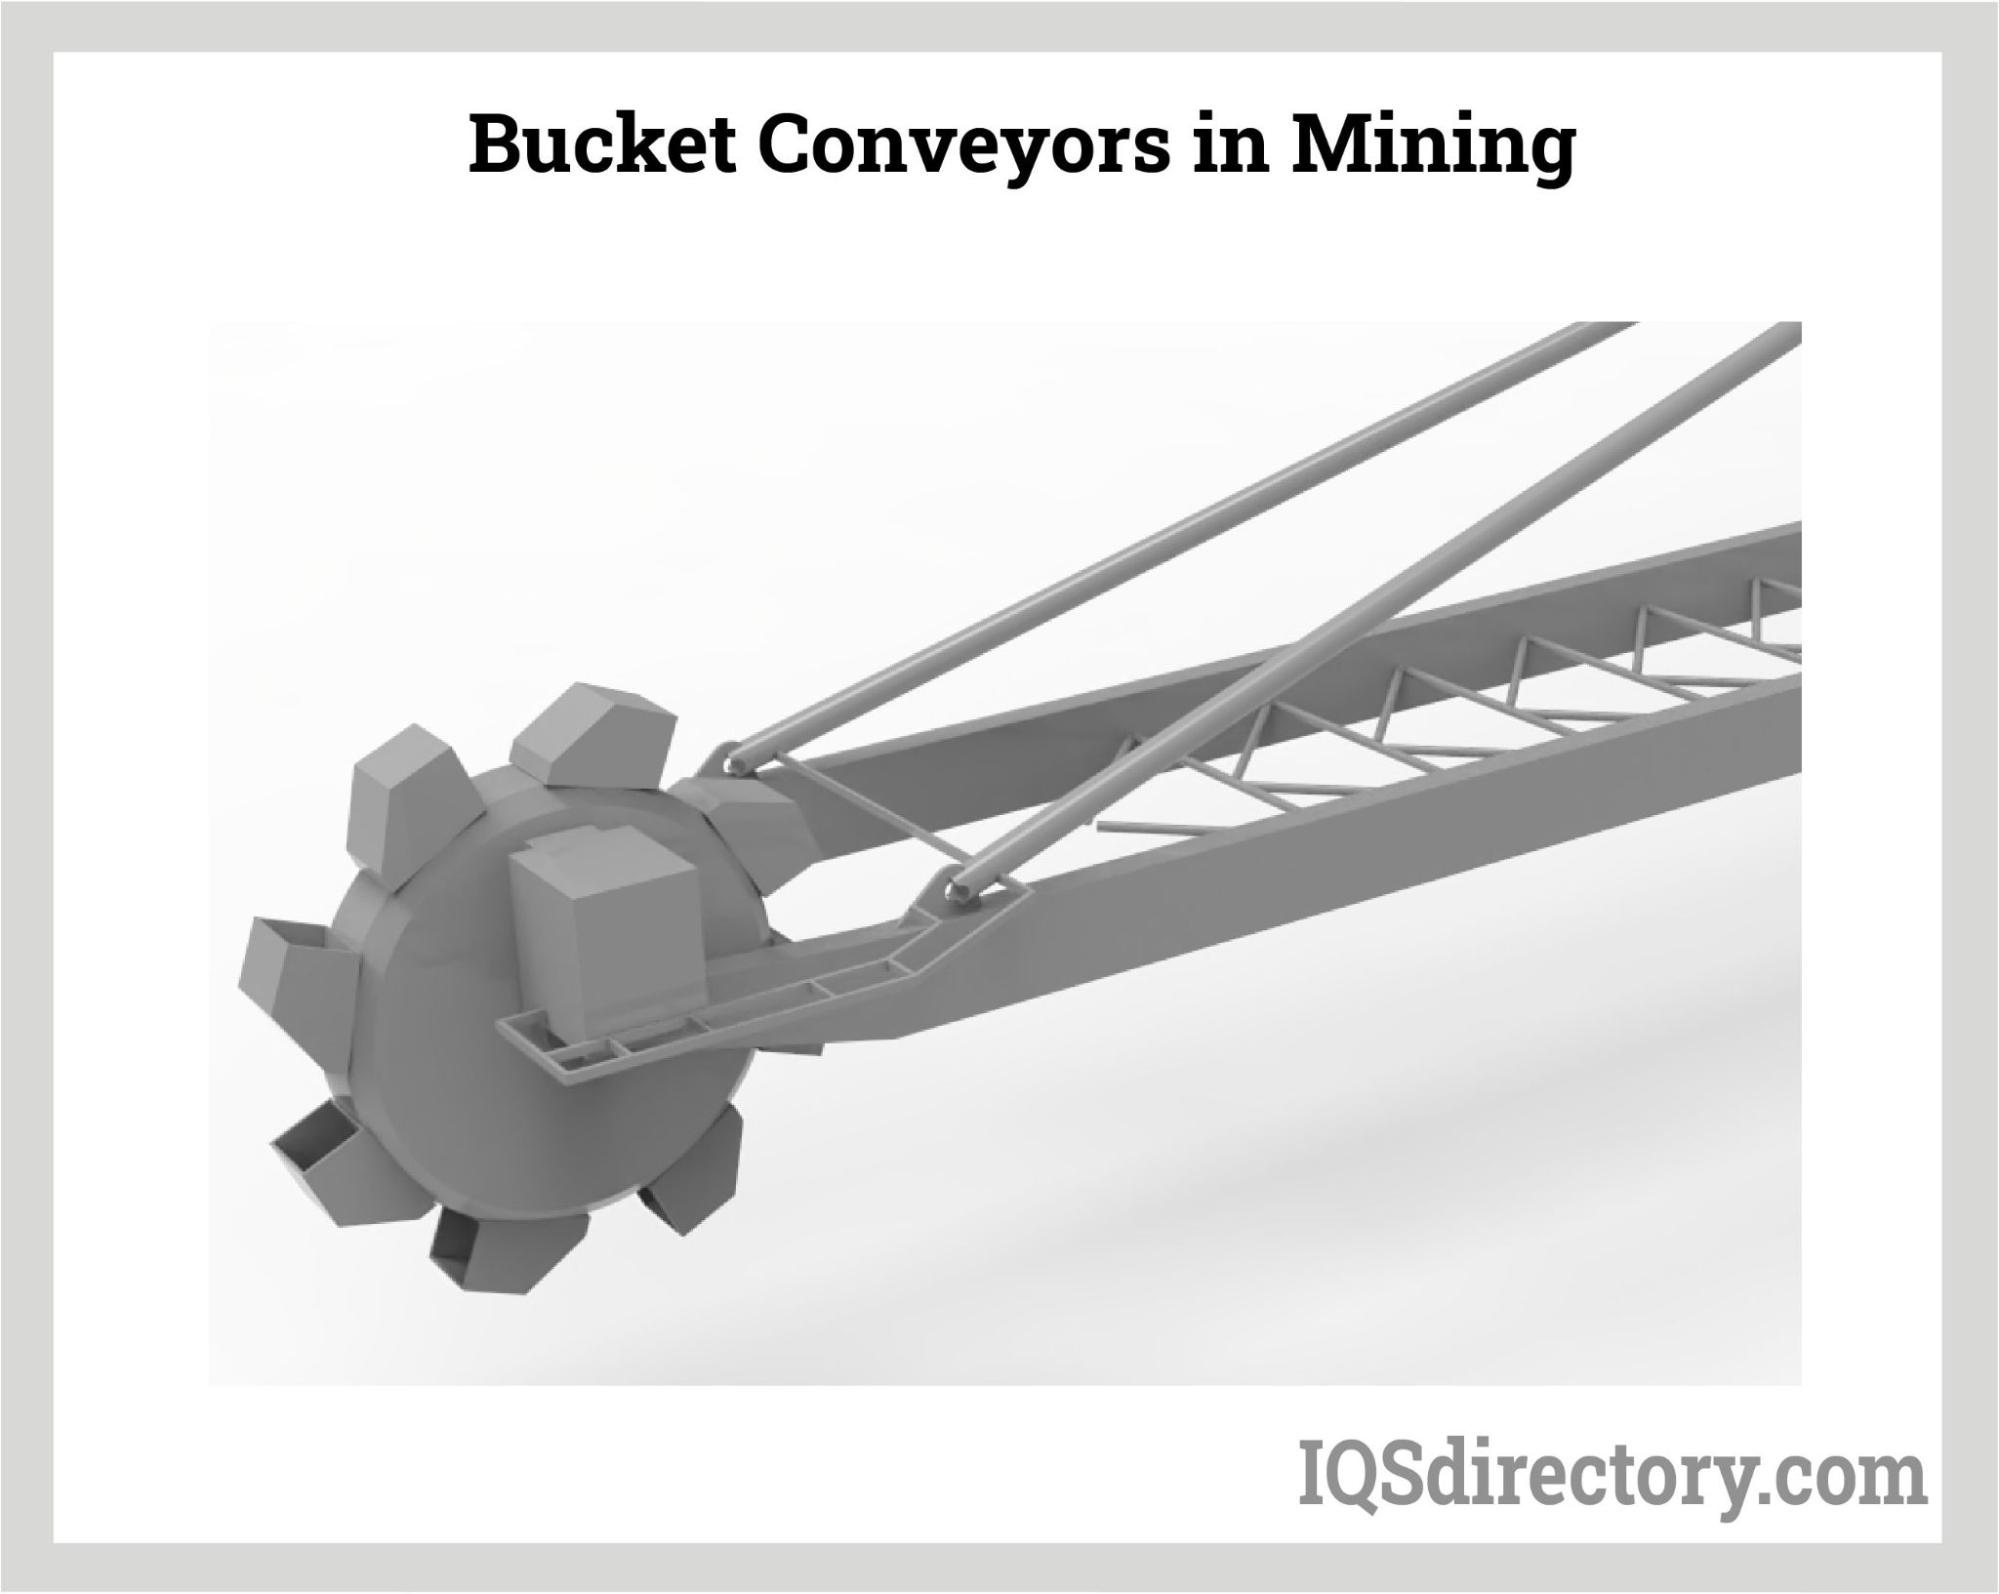 Bucket Conveyors in Mining